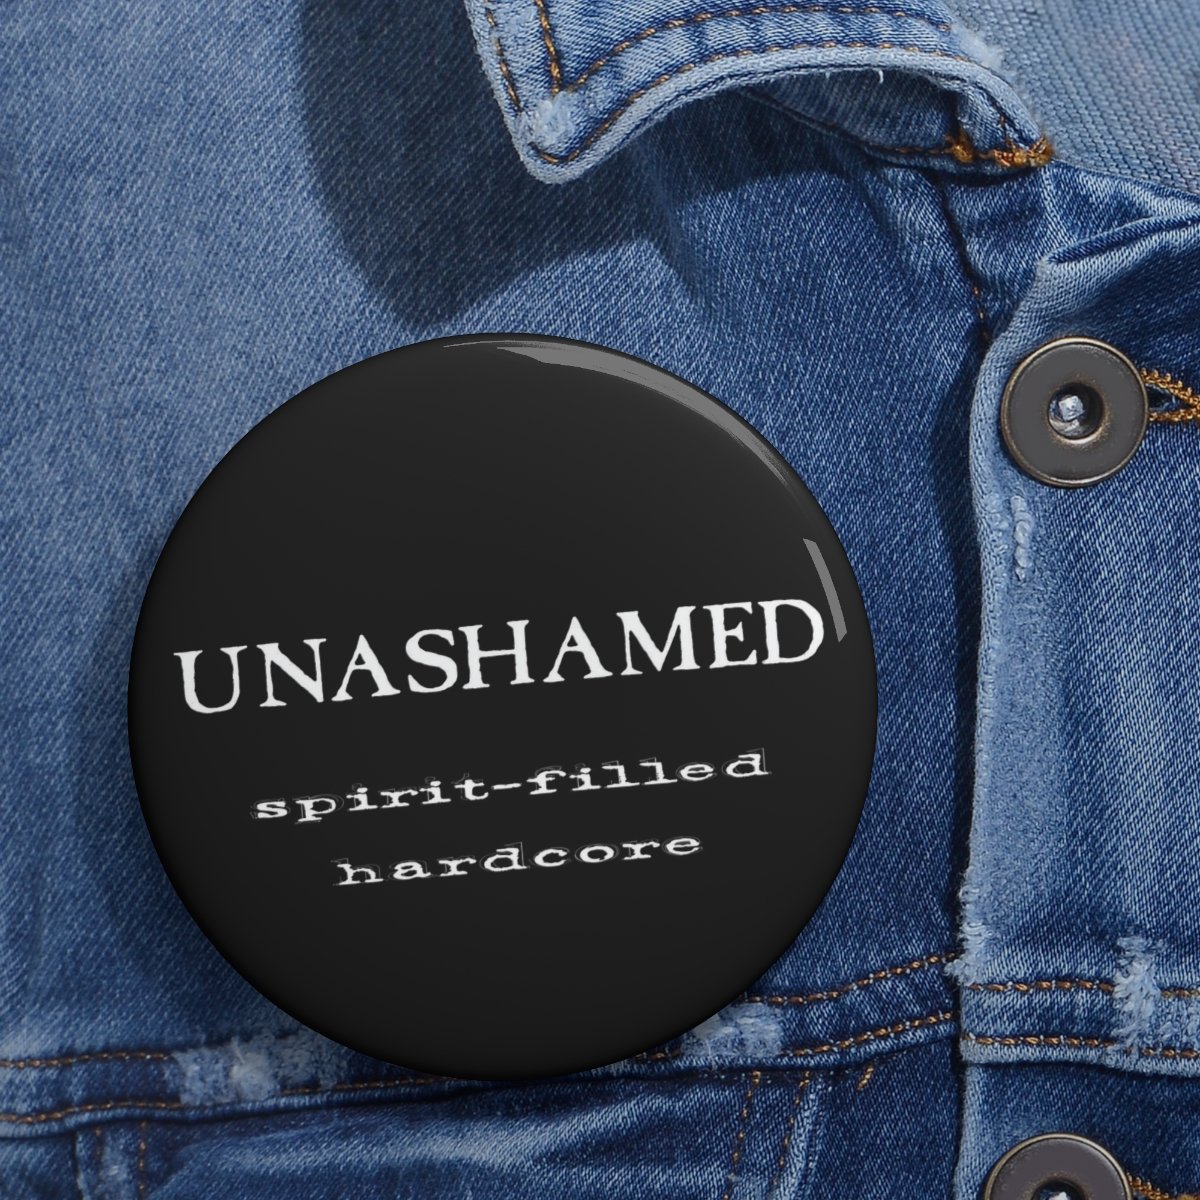 Unashamed Spirit Filled Hardcore Pin Buttons